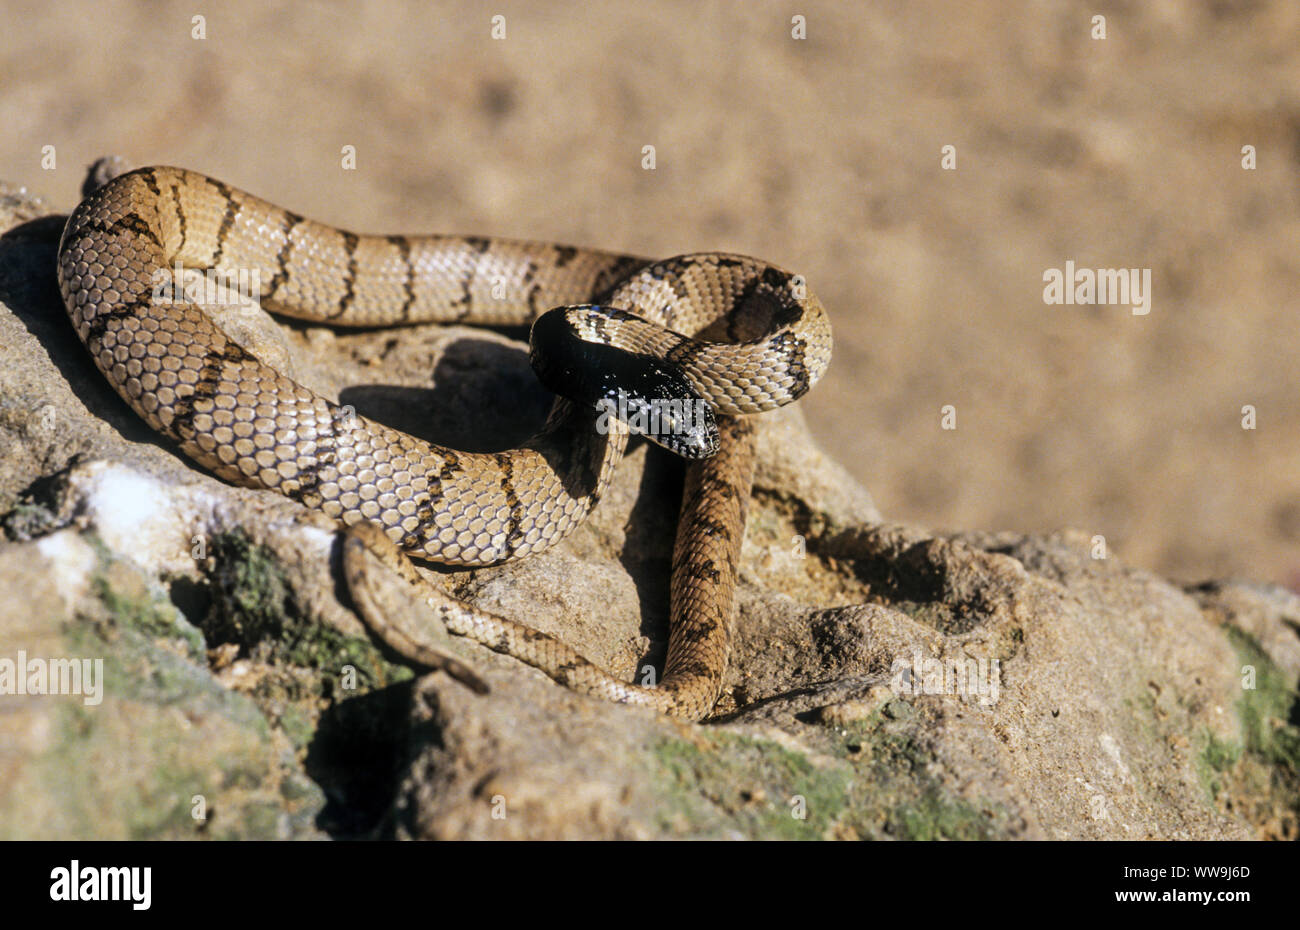 Desert Tiger Snake (Telescopus hoogstraali) Stock Photo